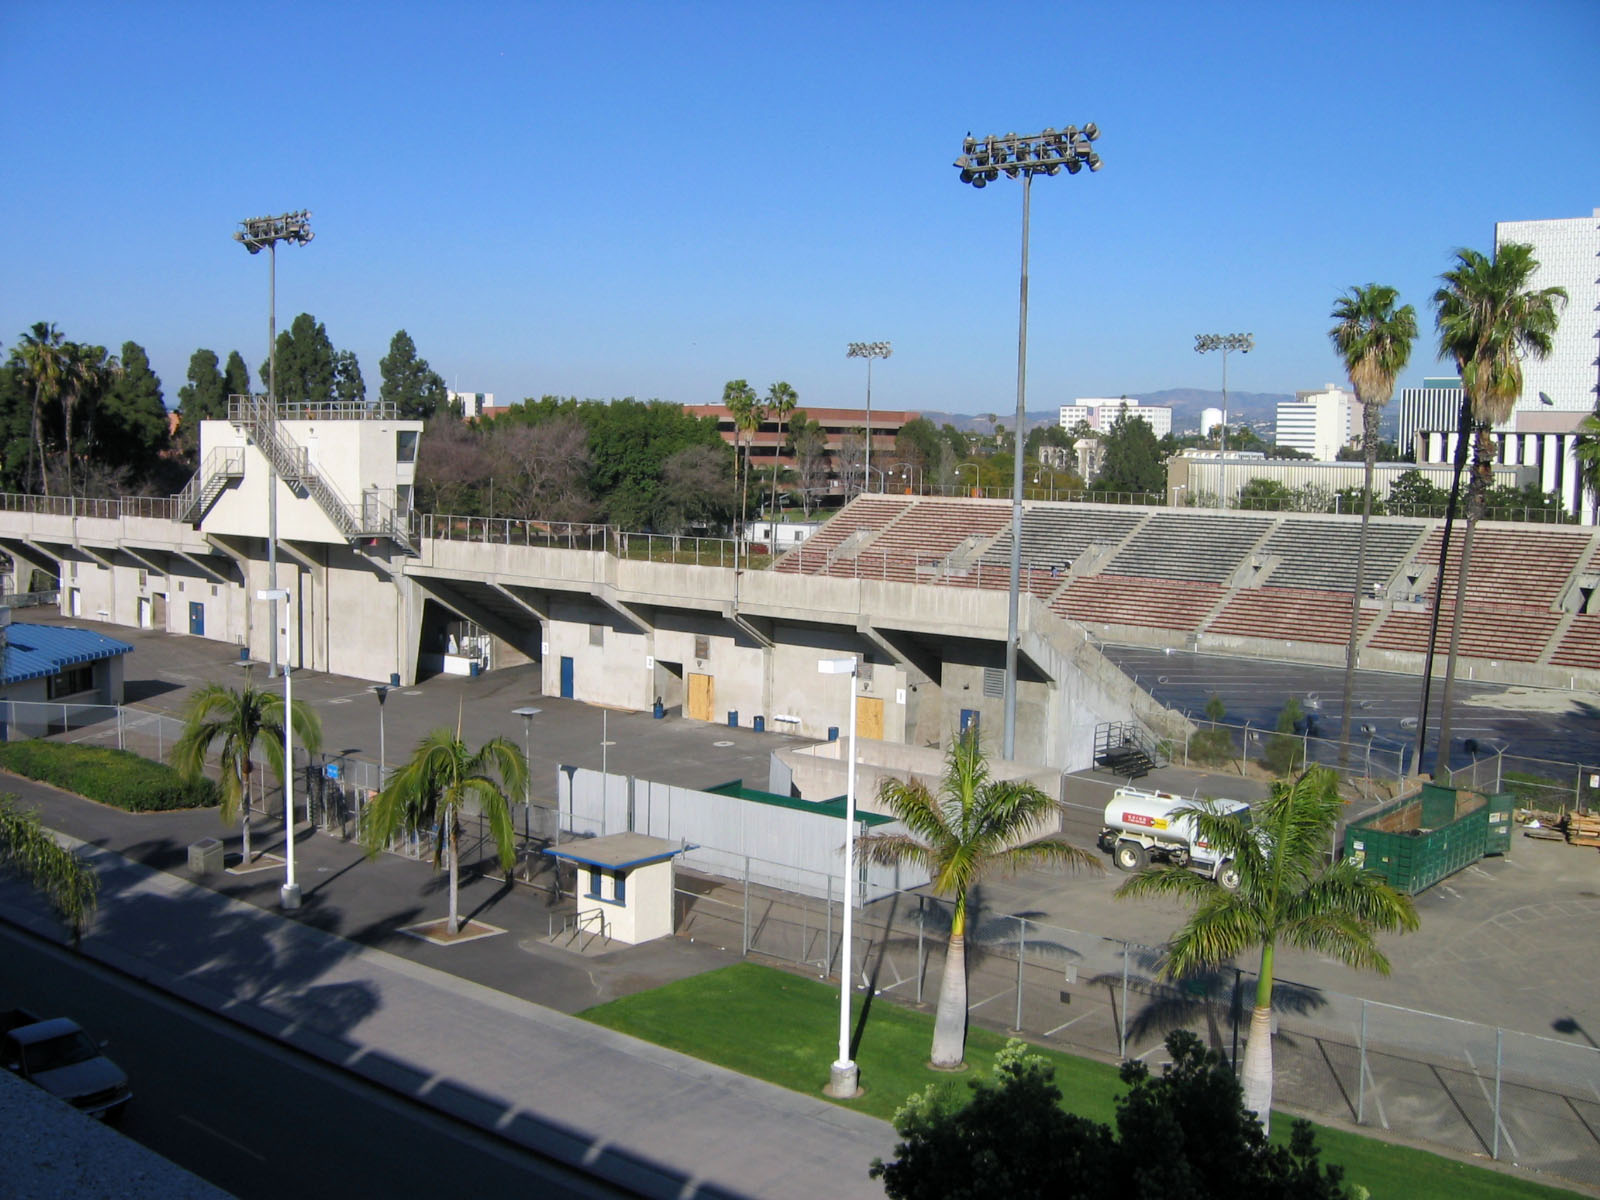 City Stadium 07 In Santa Ana California Image Free Stock Photo Public Domain Photo Cc0 Images